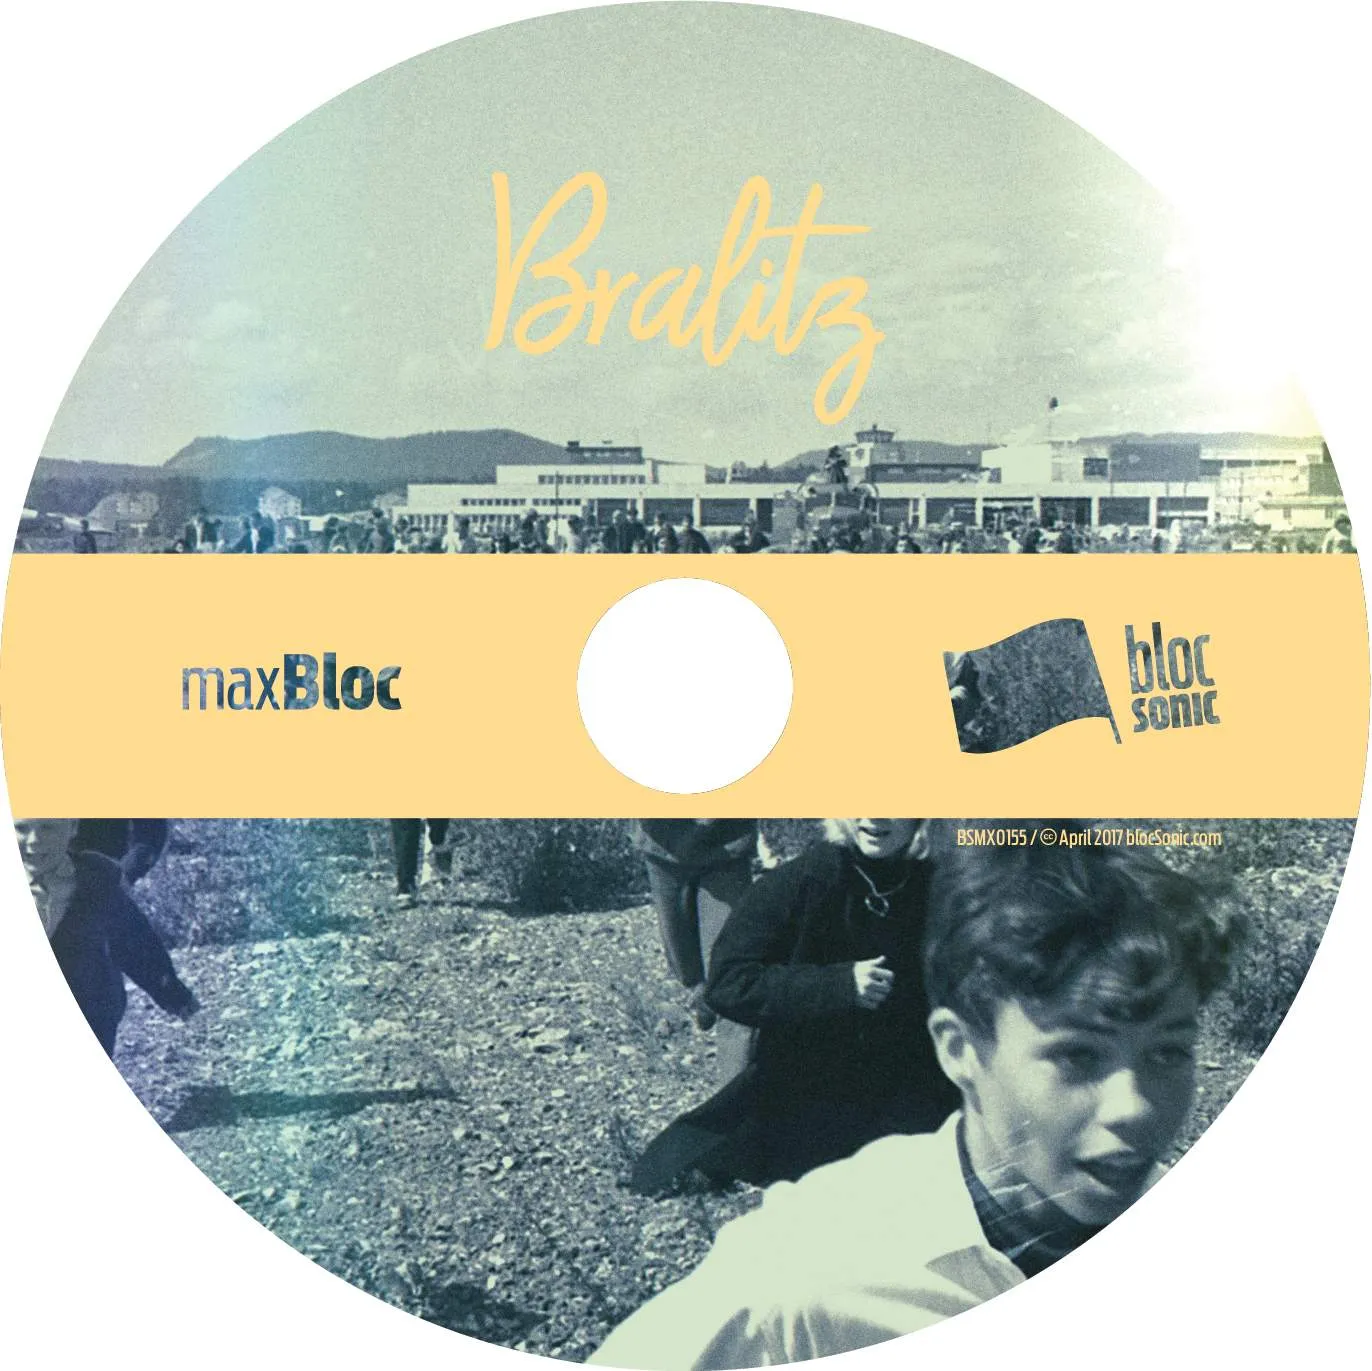 Album disc for “Bralitz” by Bralitz